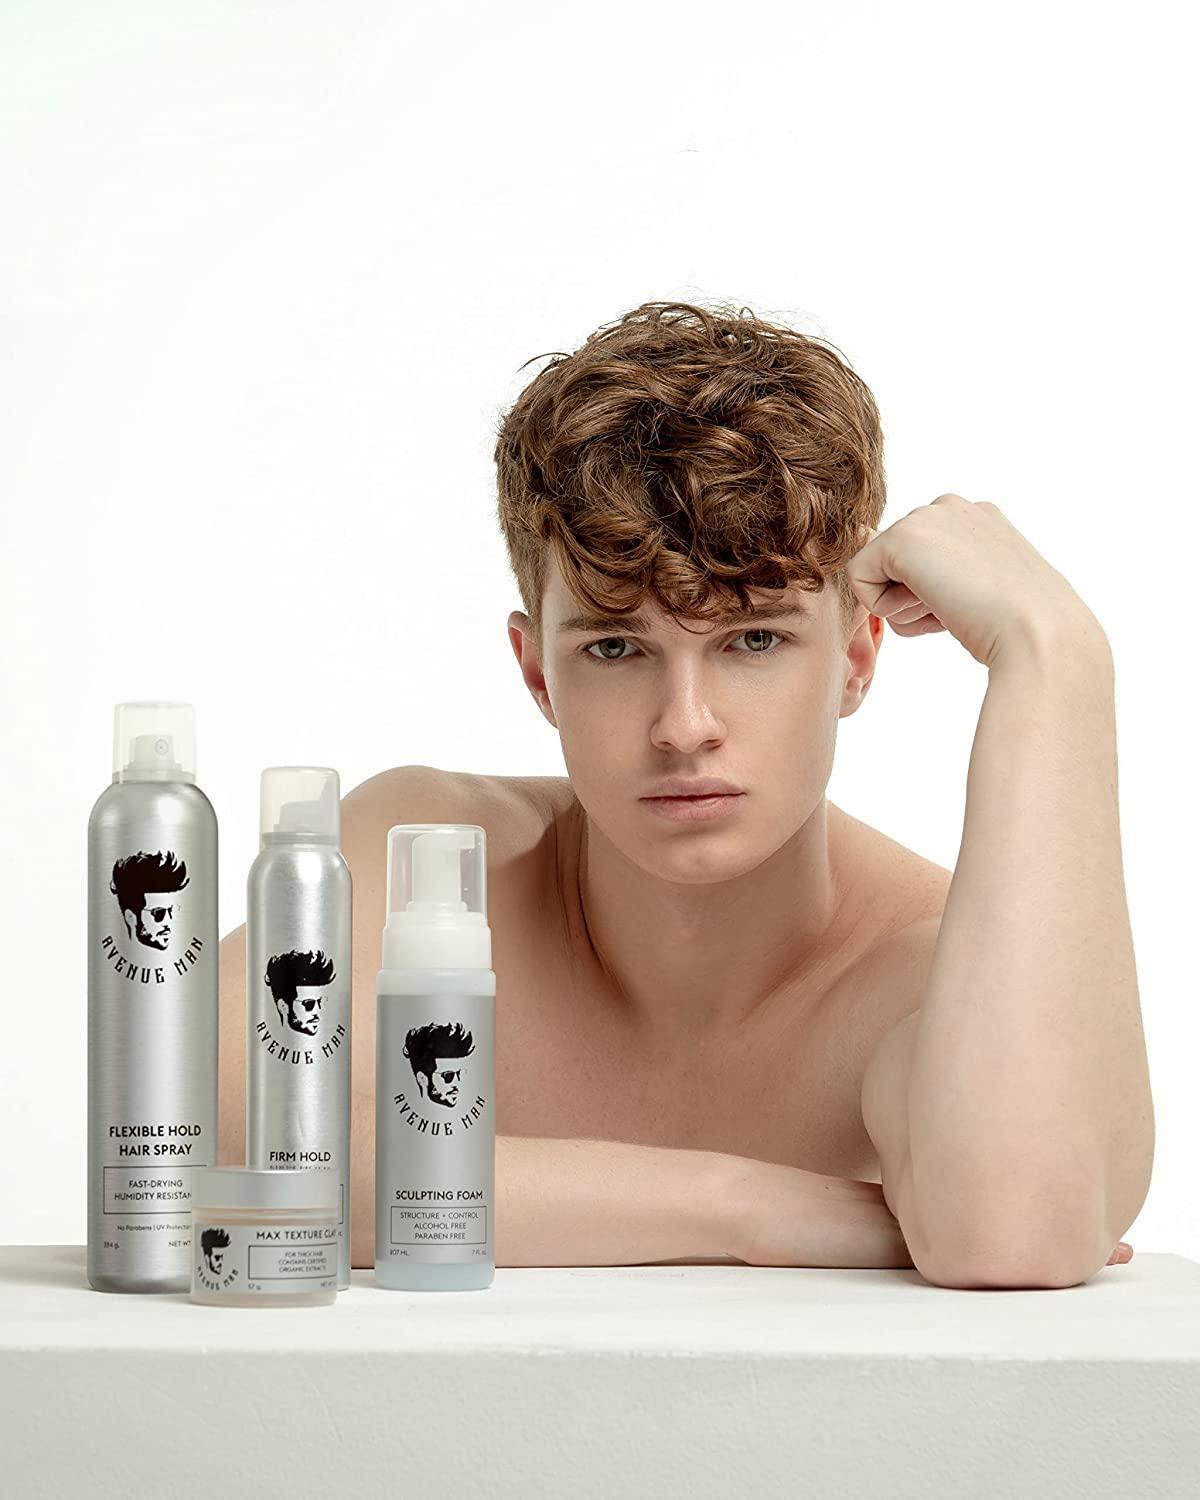 Top 100 image hair spray for men 